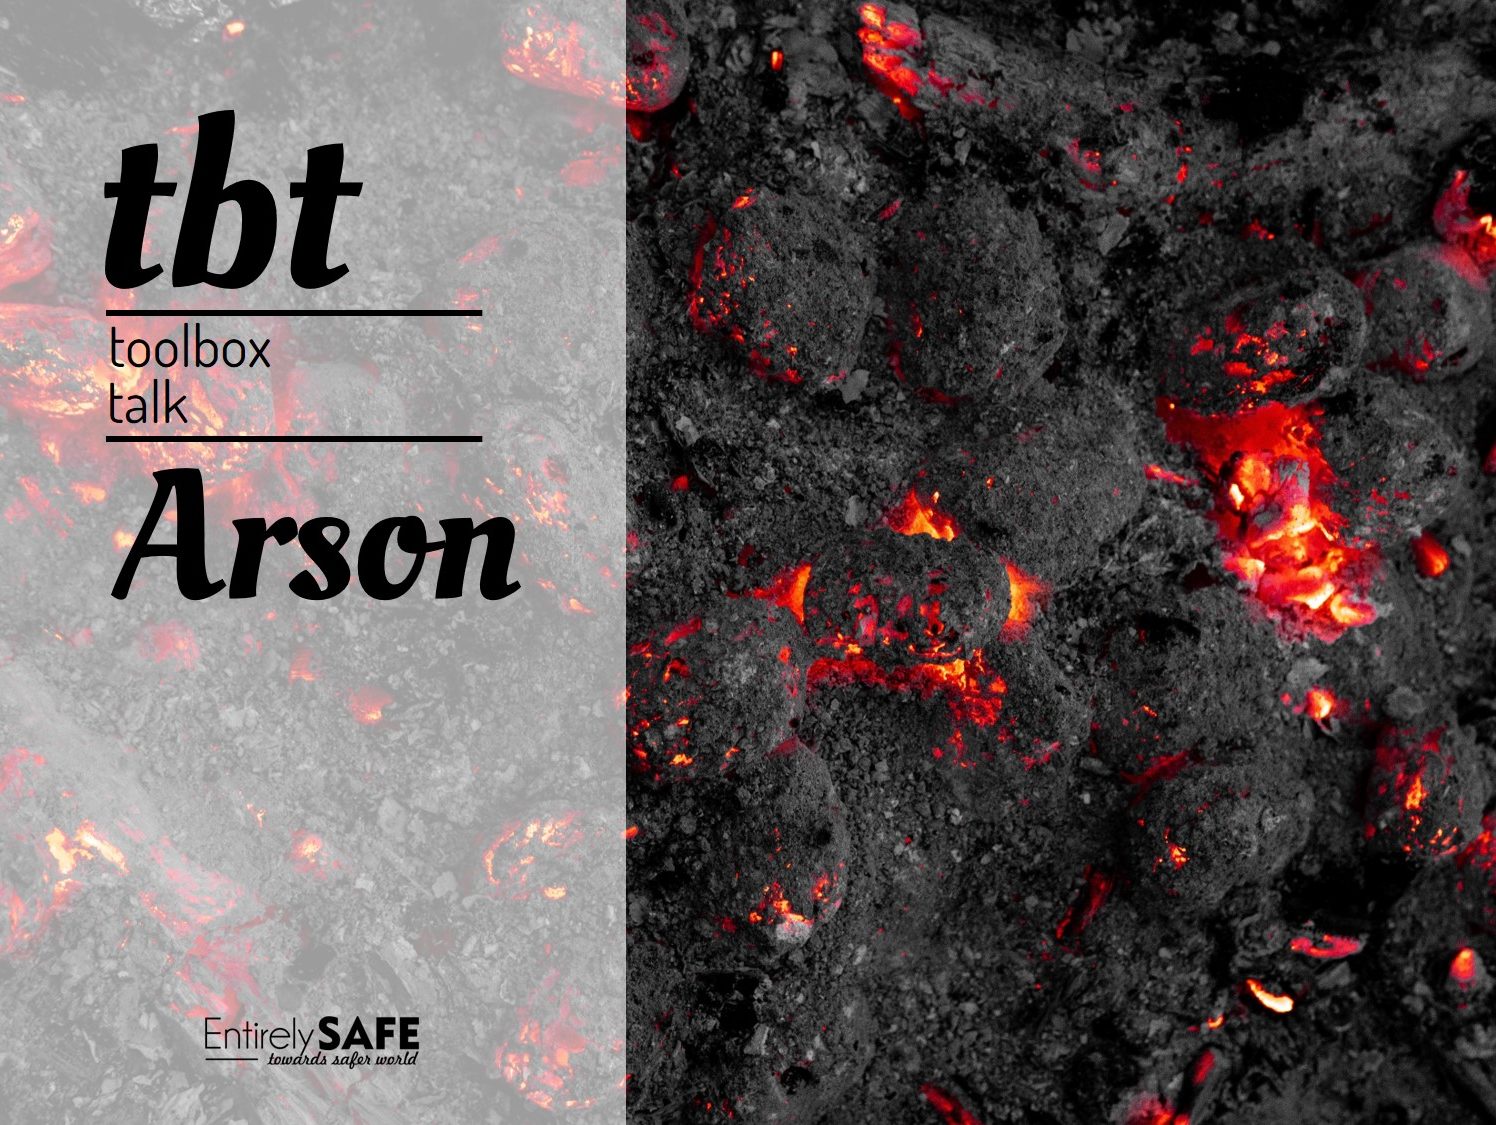 toolbox-talk-arson-tbt